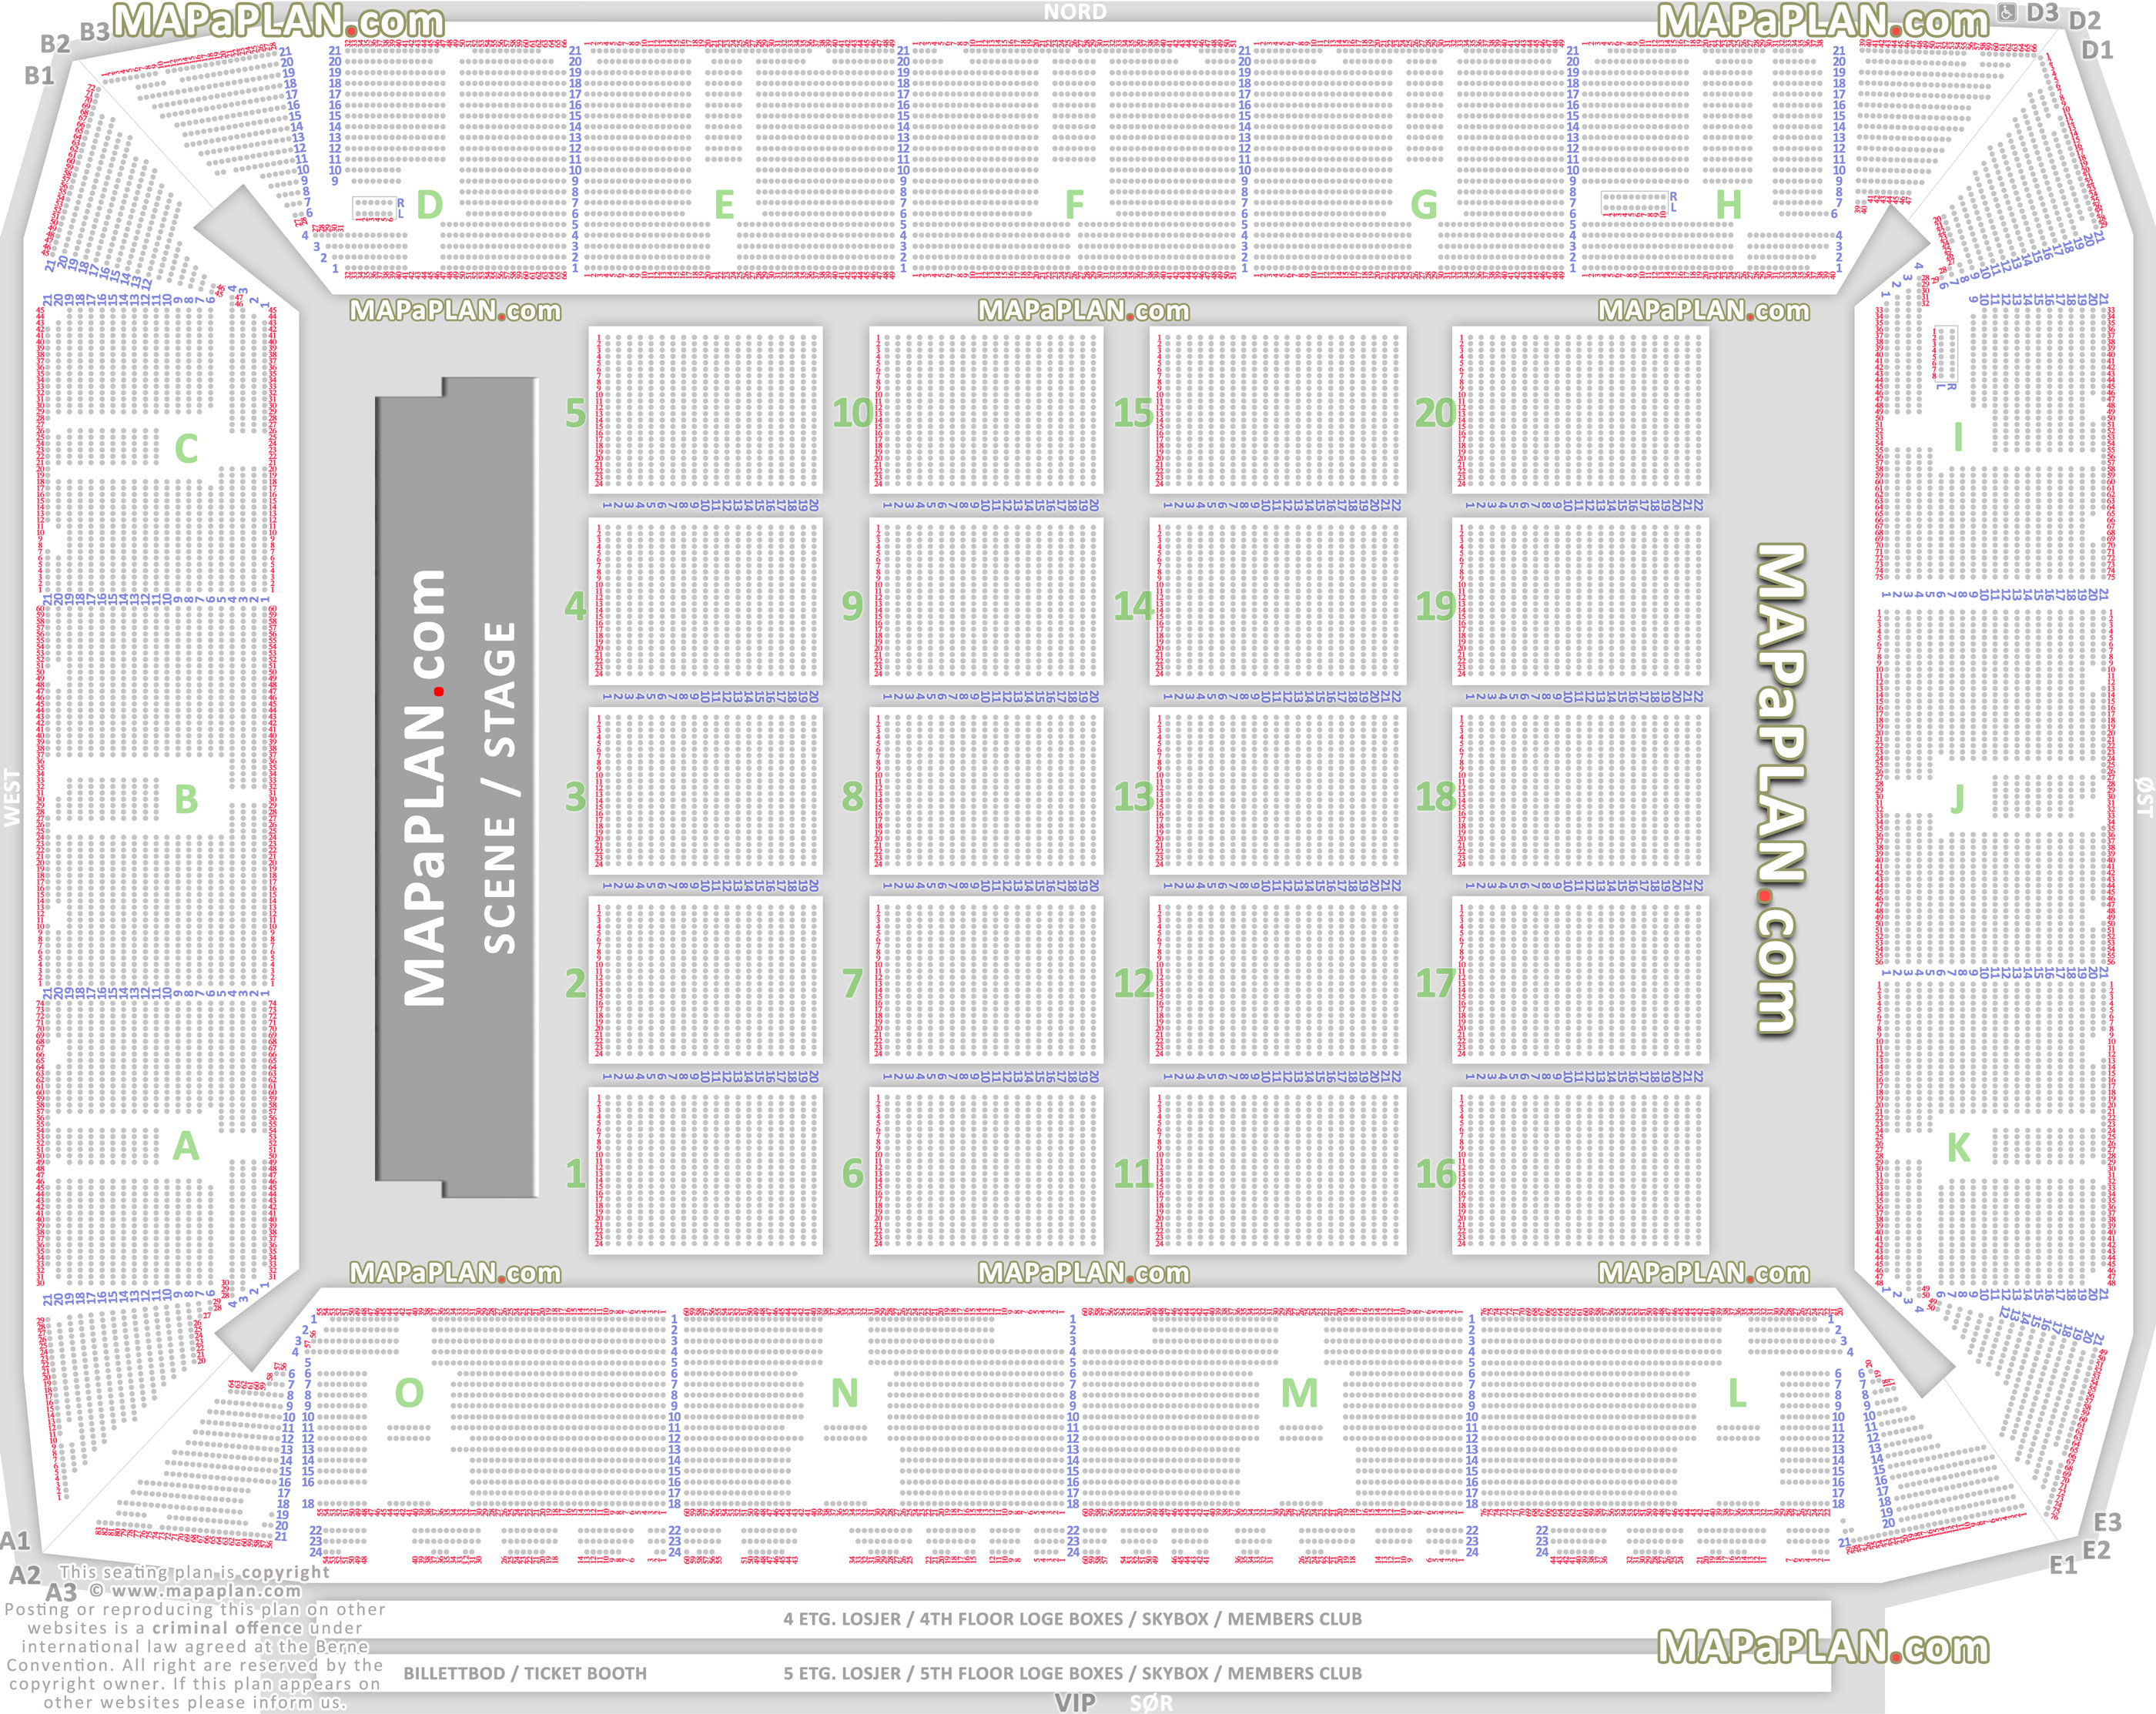 detailed seat row numbers concert floor plan detaljert konsert salkart beste sitteplasser rader nummerering Oslo Telenor Arena seating plan